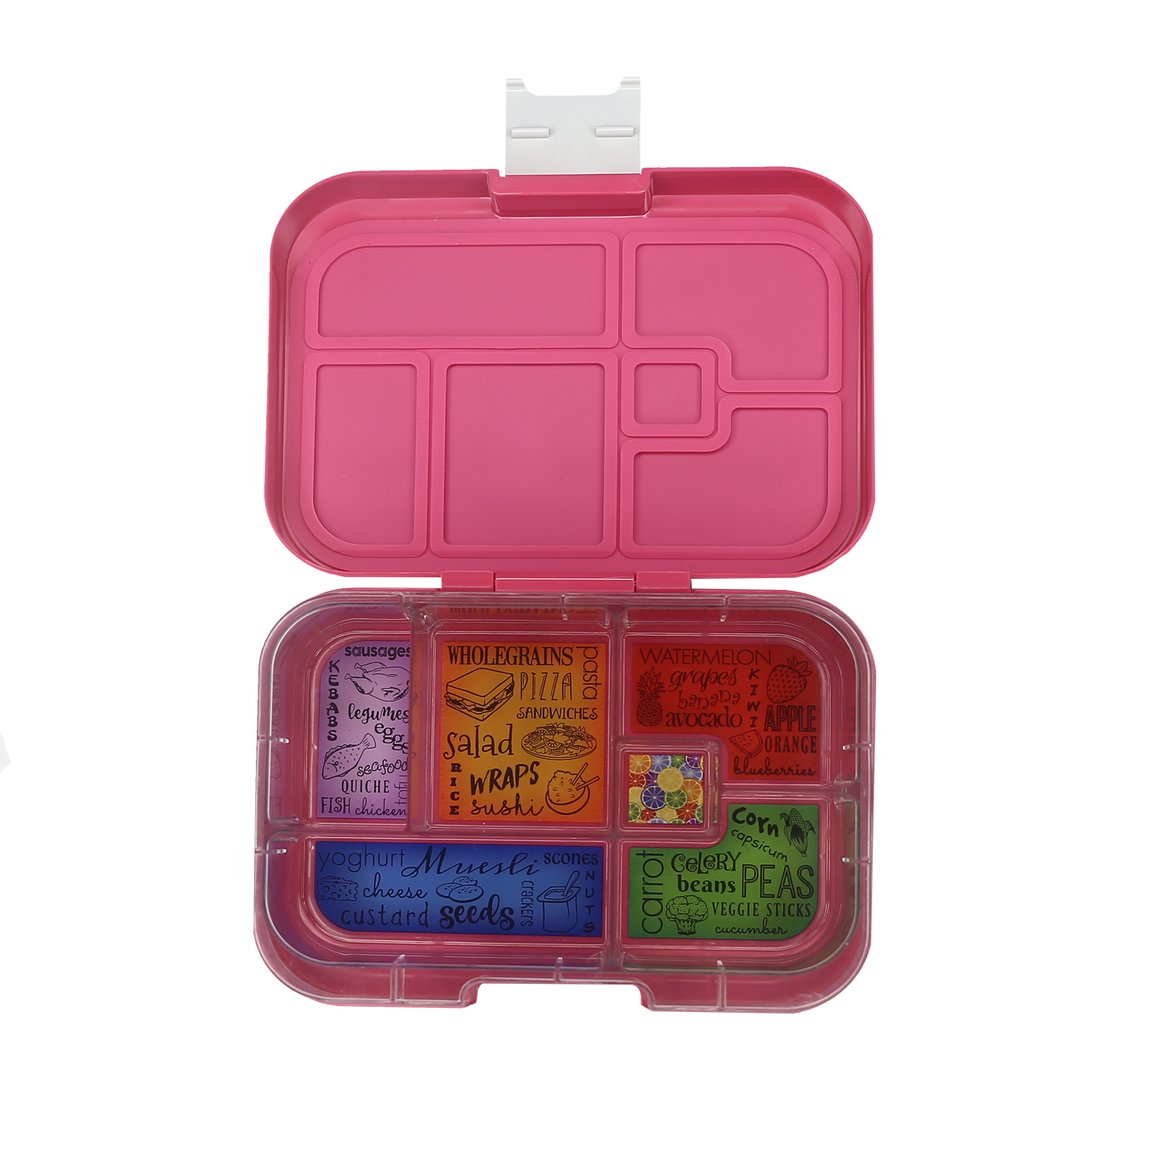 Munchbox Maxi 6 - Pink Princess